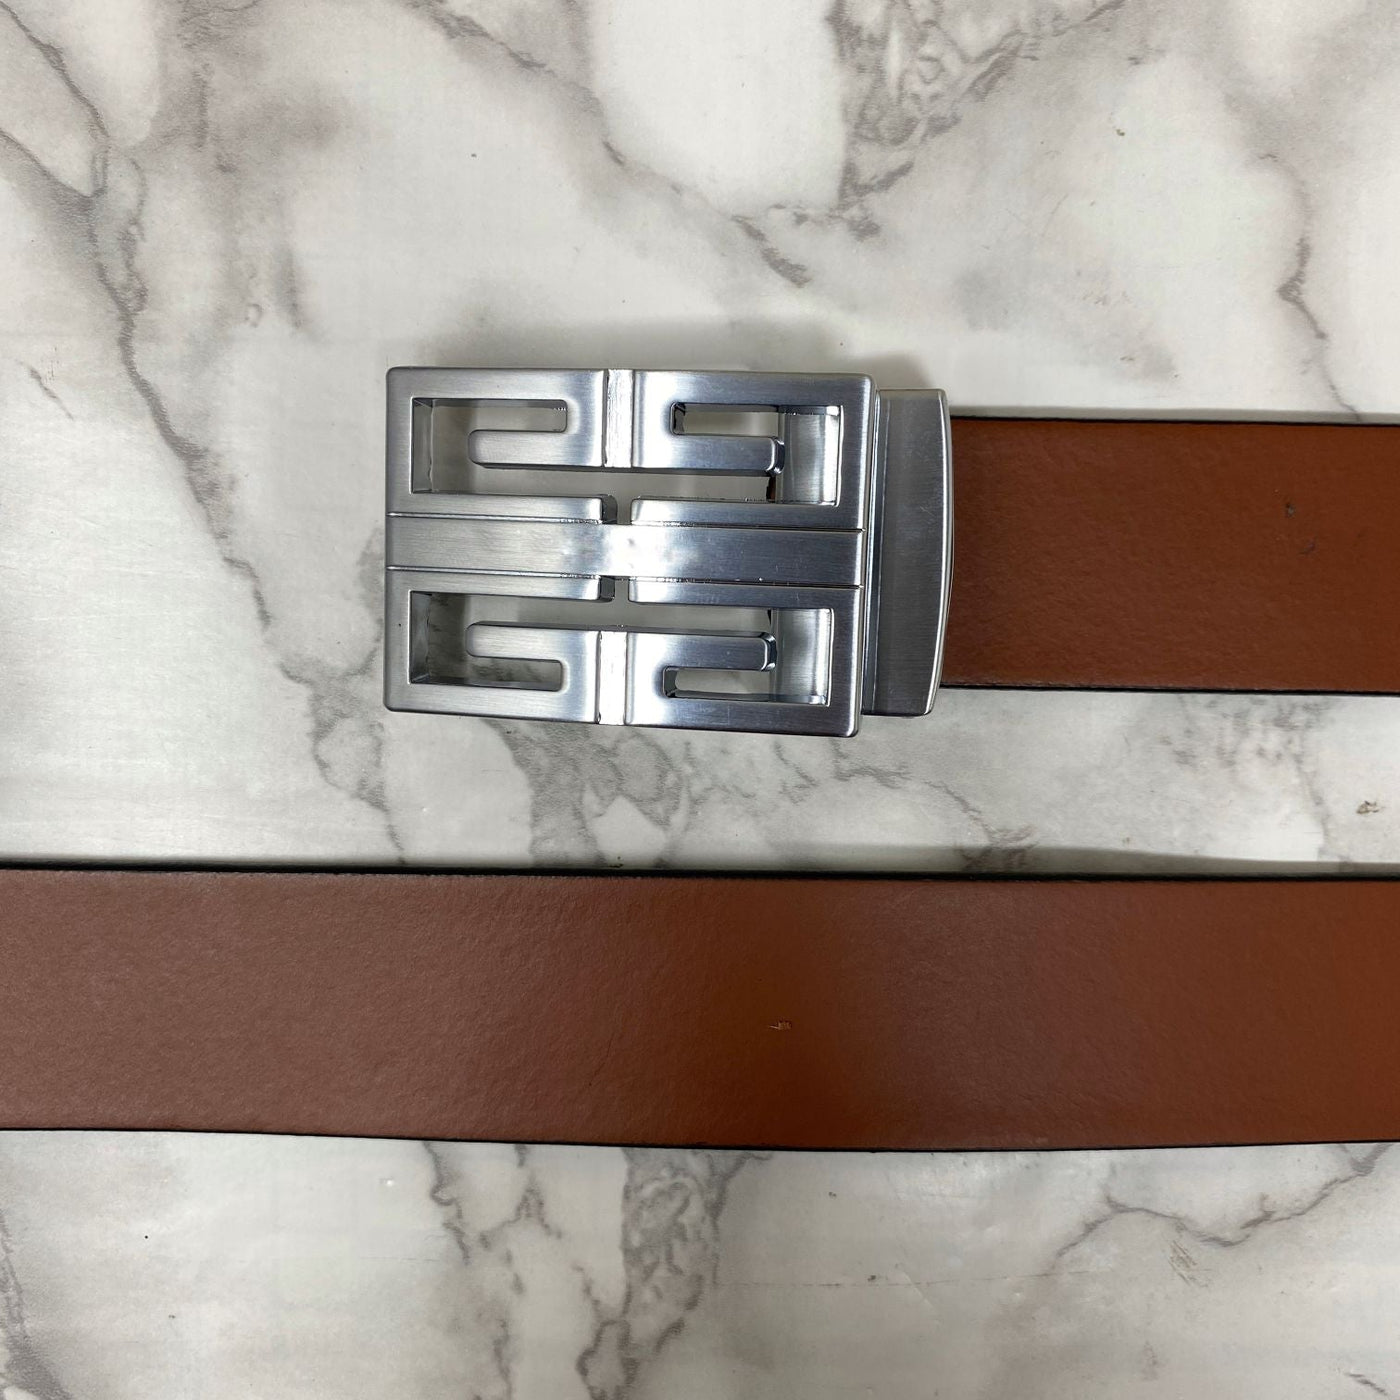 New Arrival Square Formal Leather Belt-UniqueandClassy